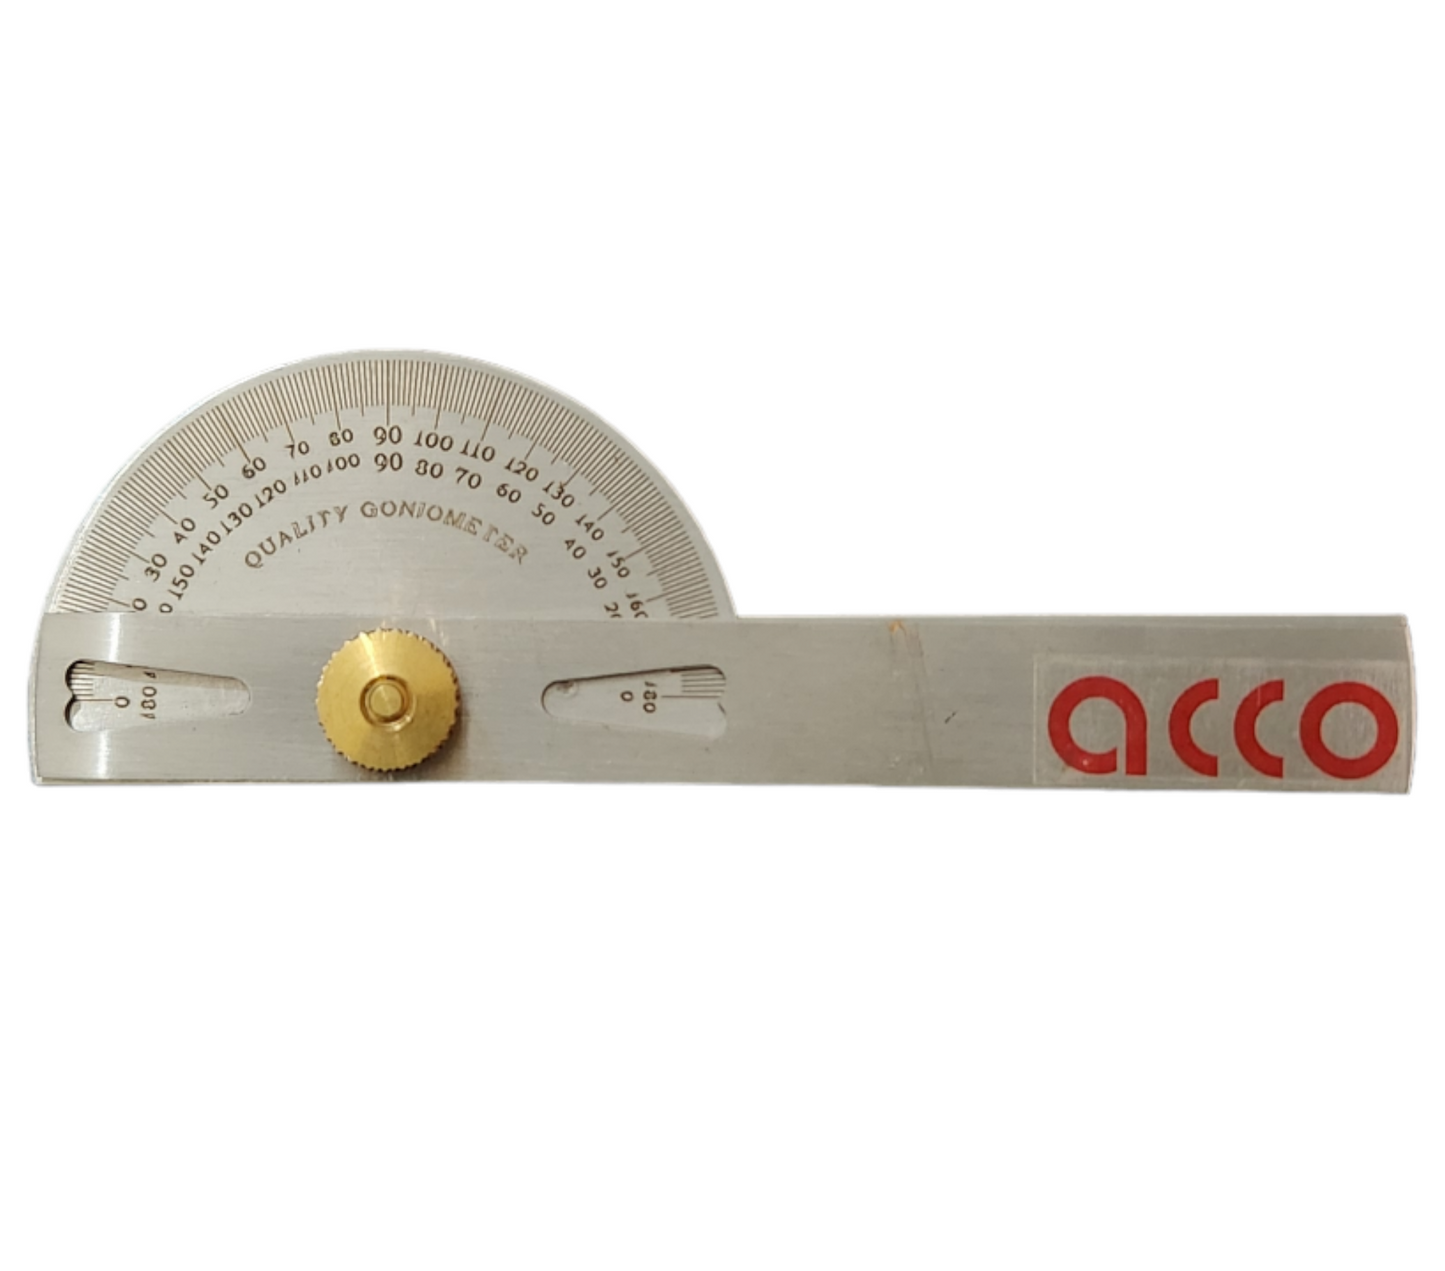 acco Metal Goniometer For Range Of Motion Set of 3